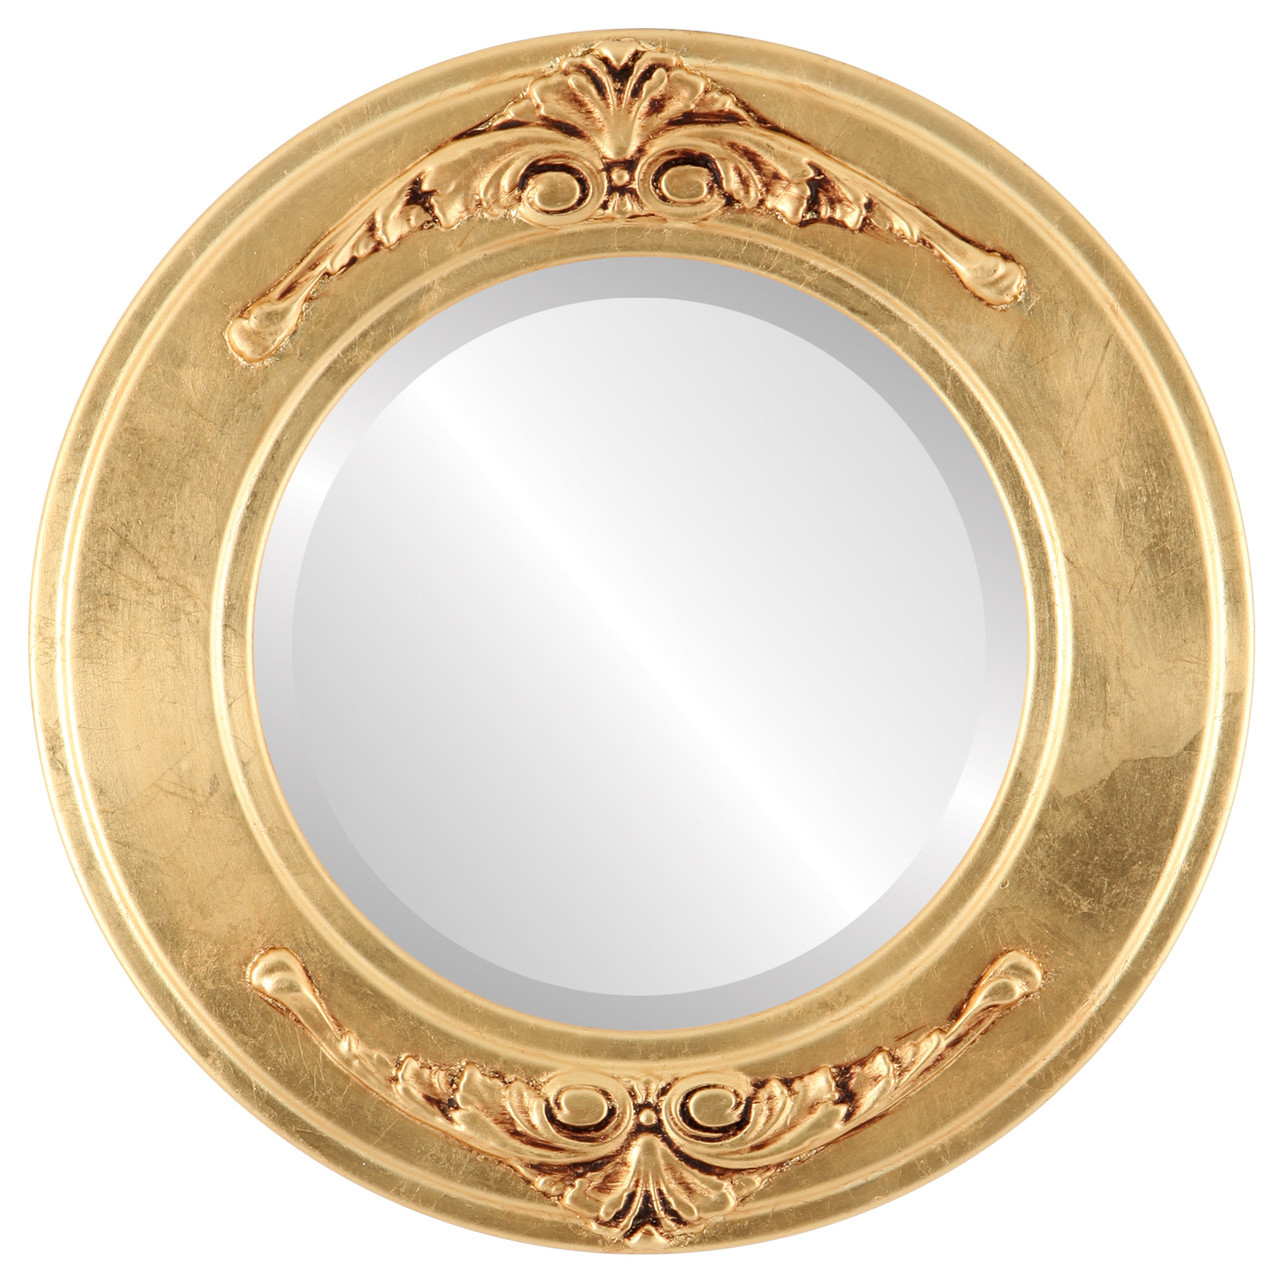 Rome Round framed mirror - Antique Gold Leaf